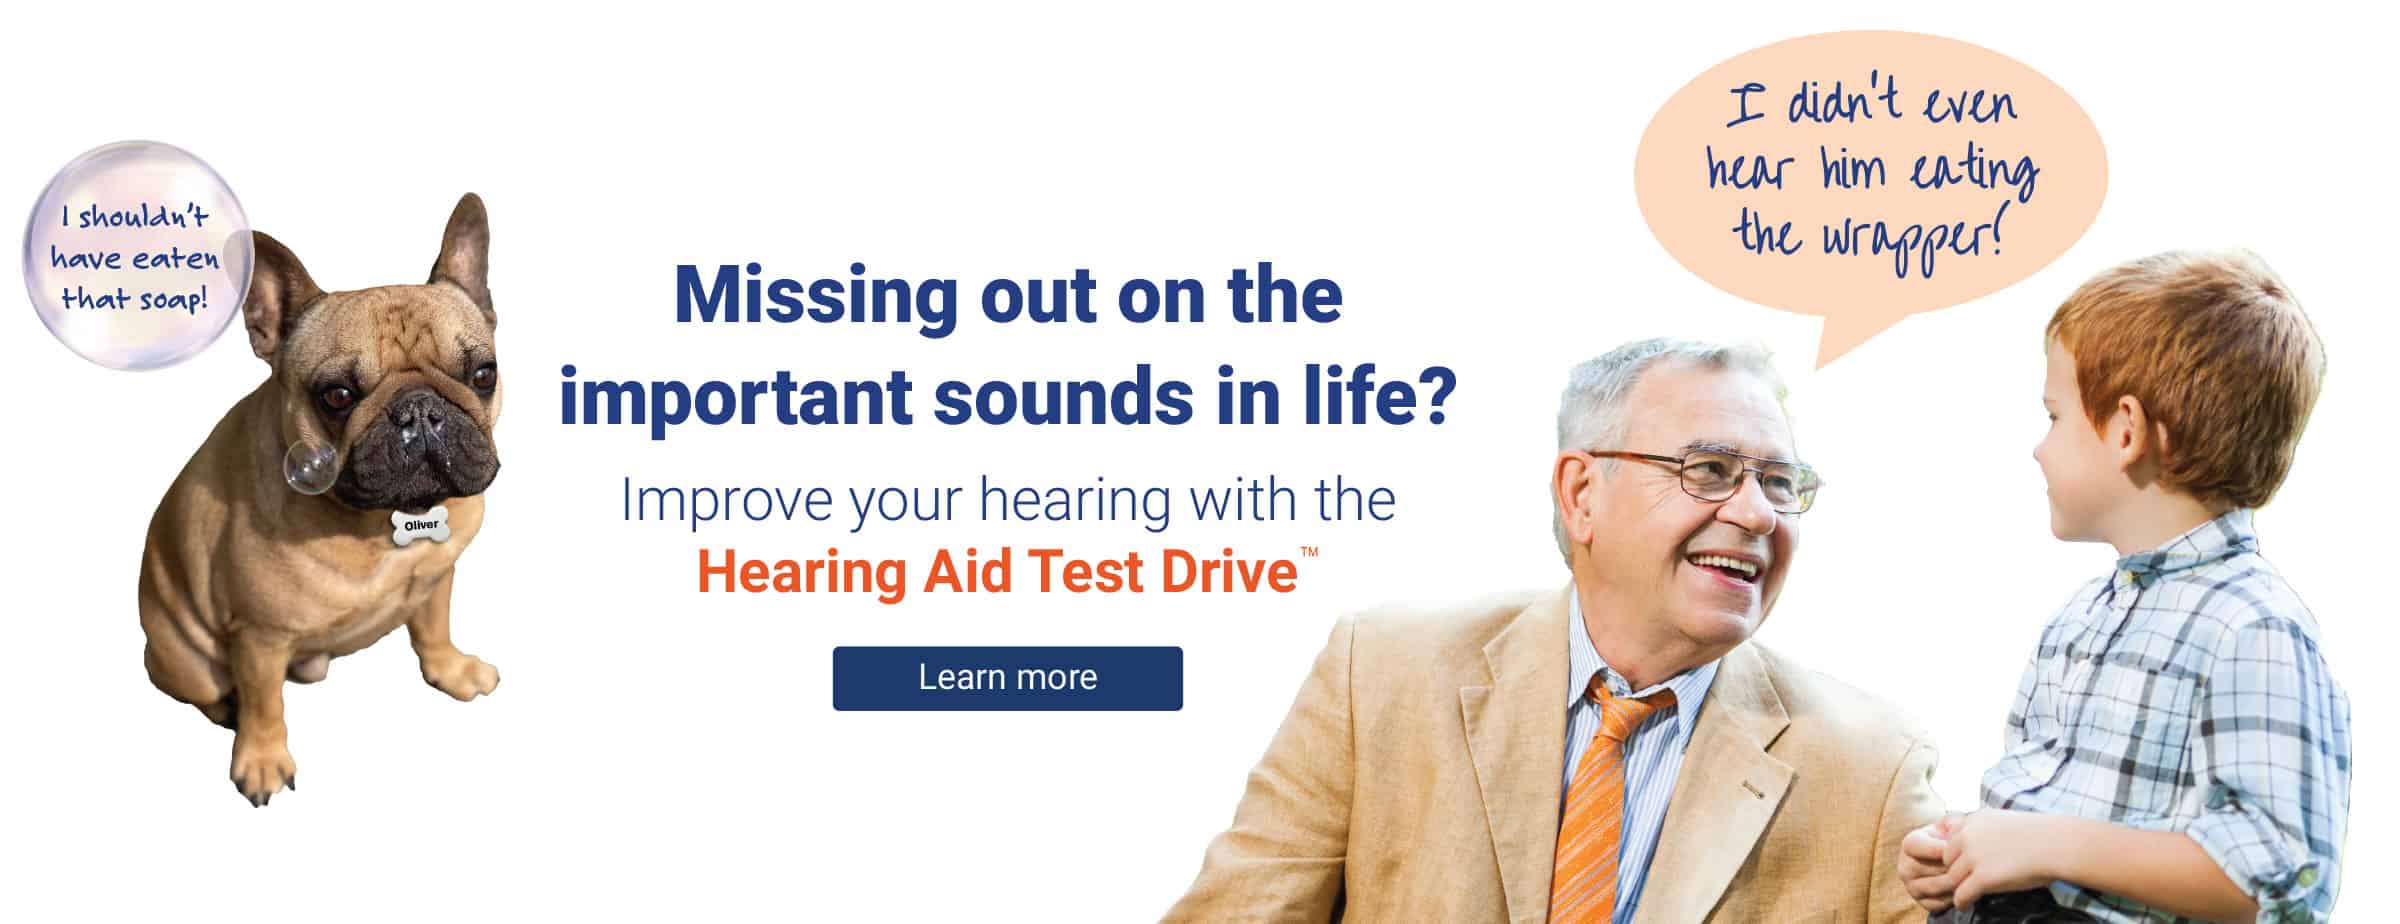 Hearing Aid Test Drive